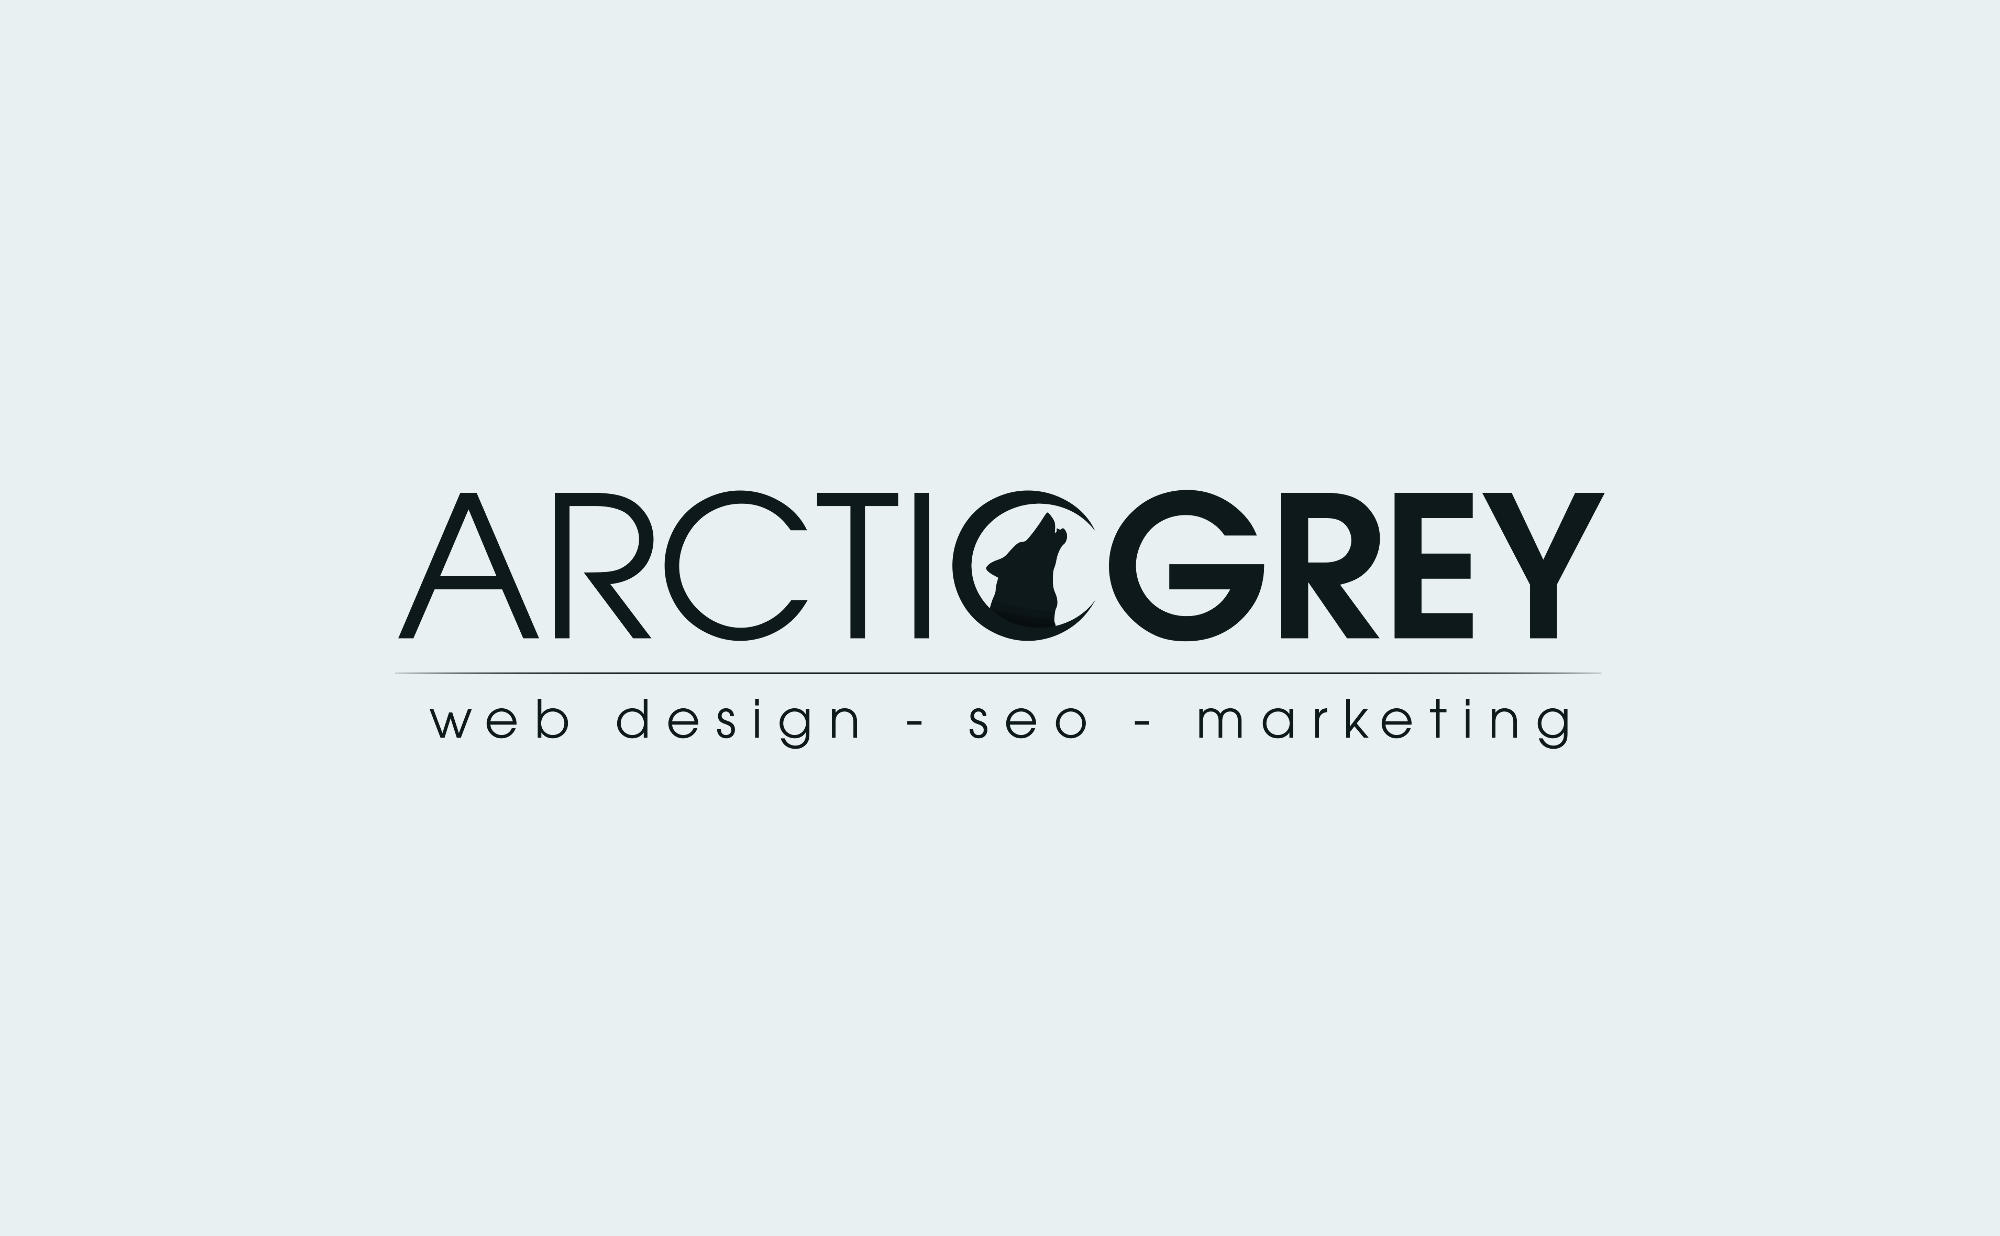 Best SEO Website Development Company Logo: Arctic Grey Inc